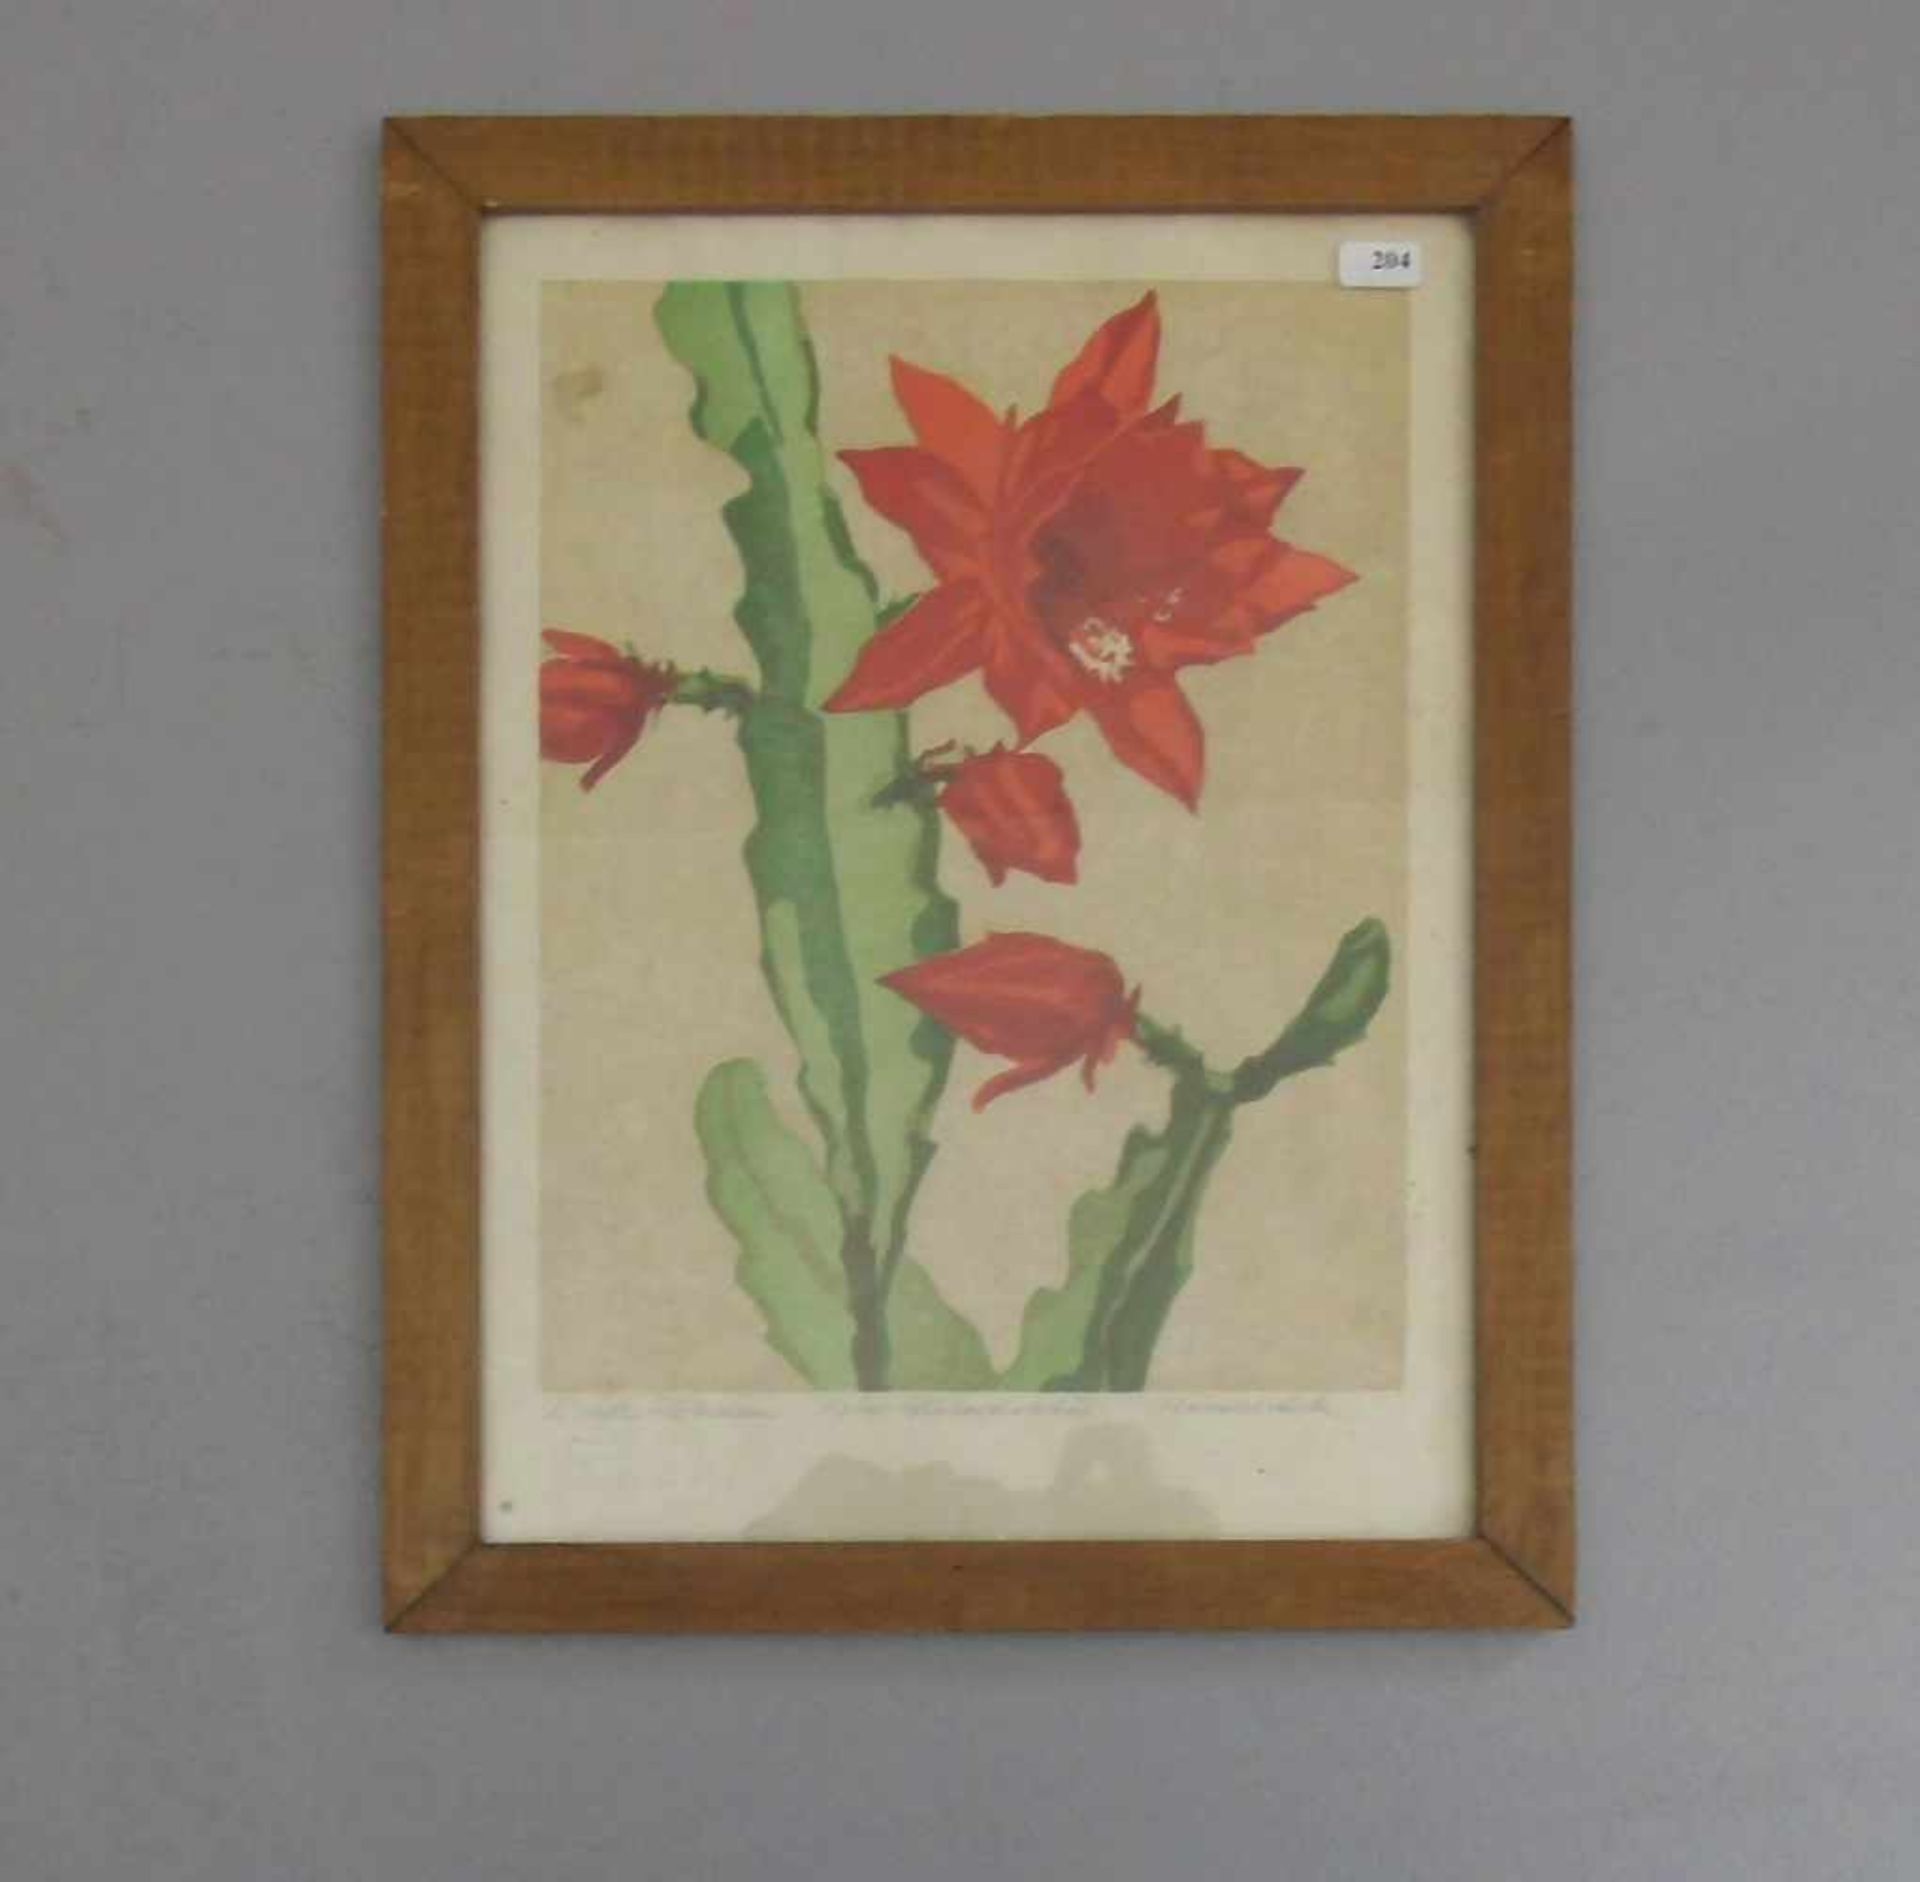 RÖTTEKEN, ERNST (Detmold 1882-1945), Farblinolschnitt: "Roter Blätterkaktus", mit Bleistift signiert